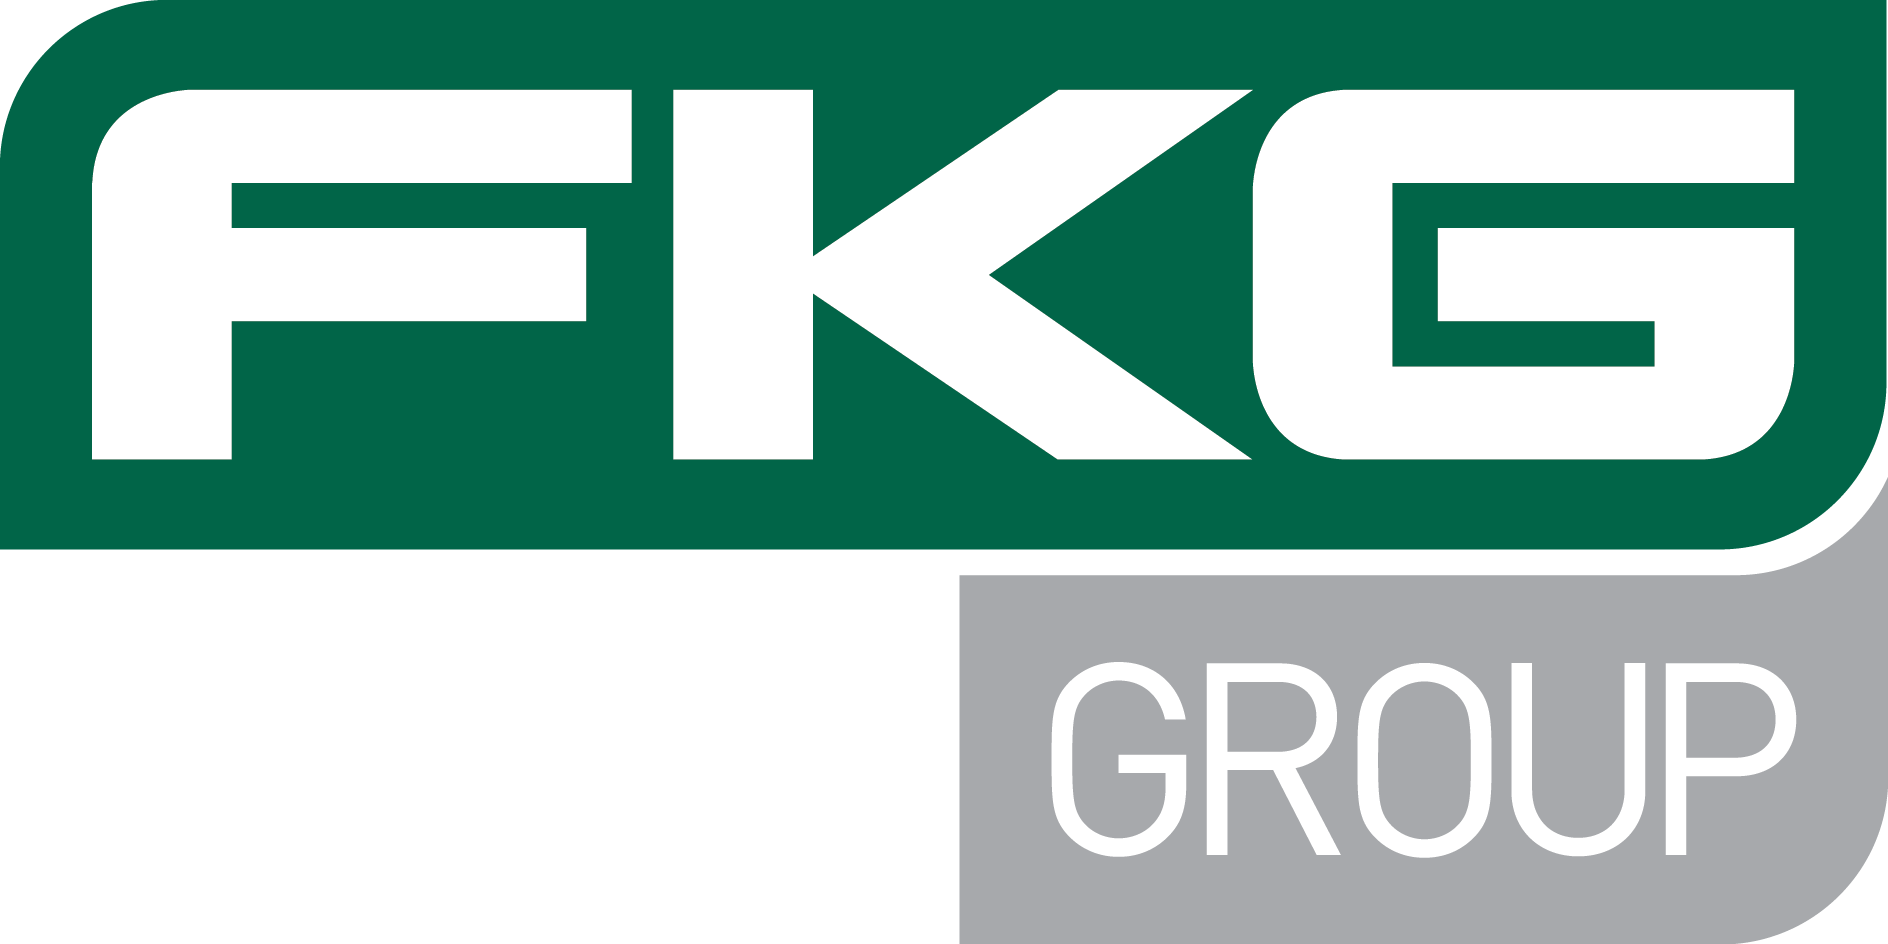 FKG Group Logo for KASA Building Group Partners